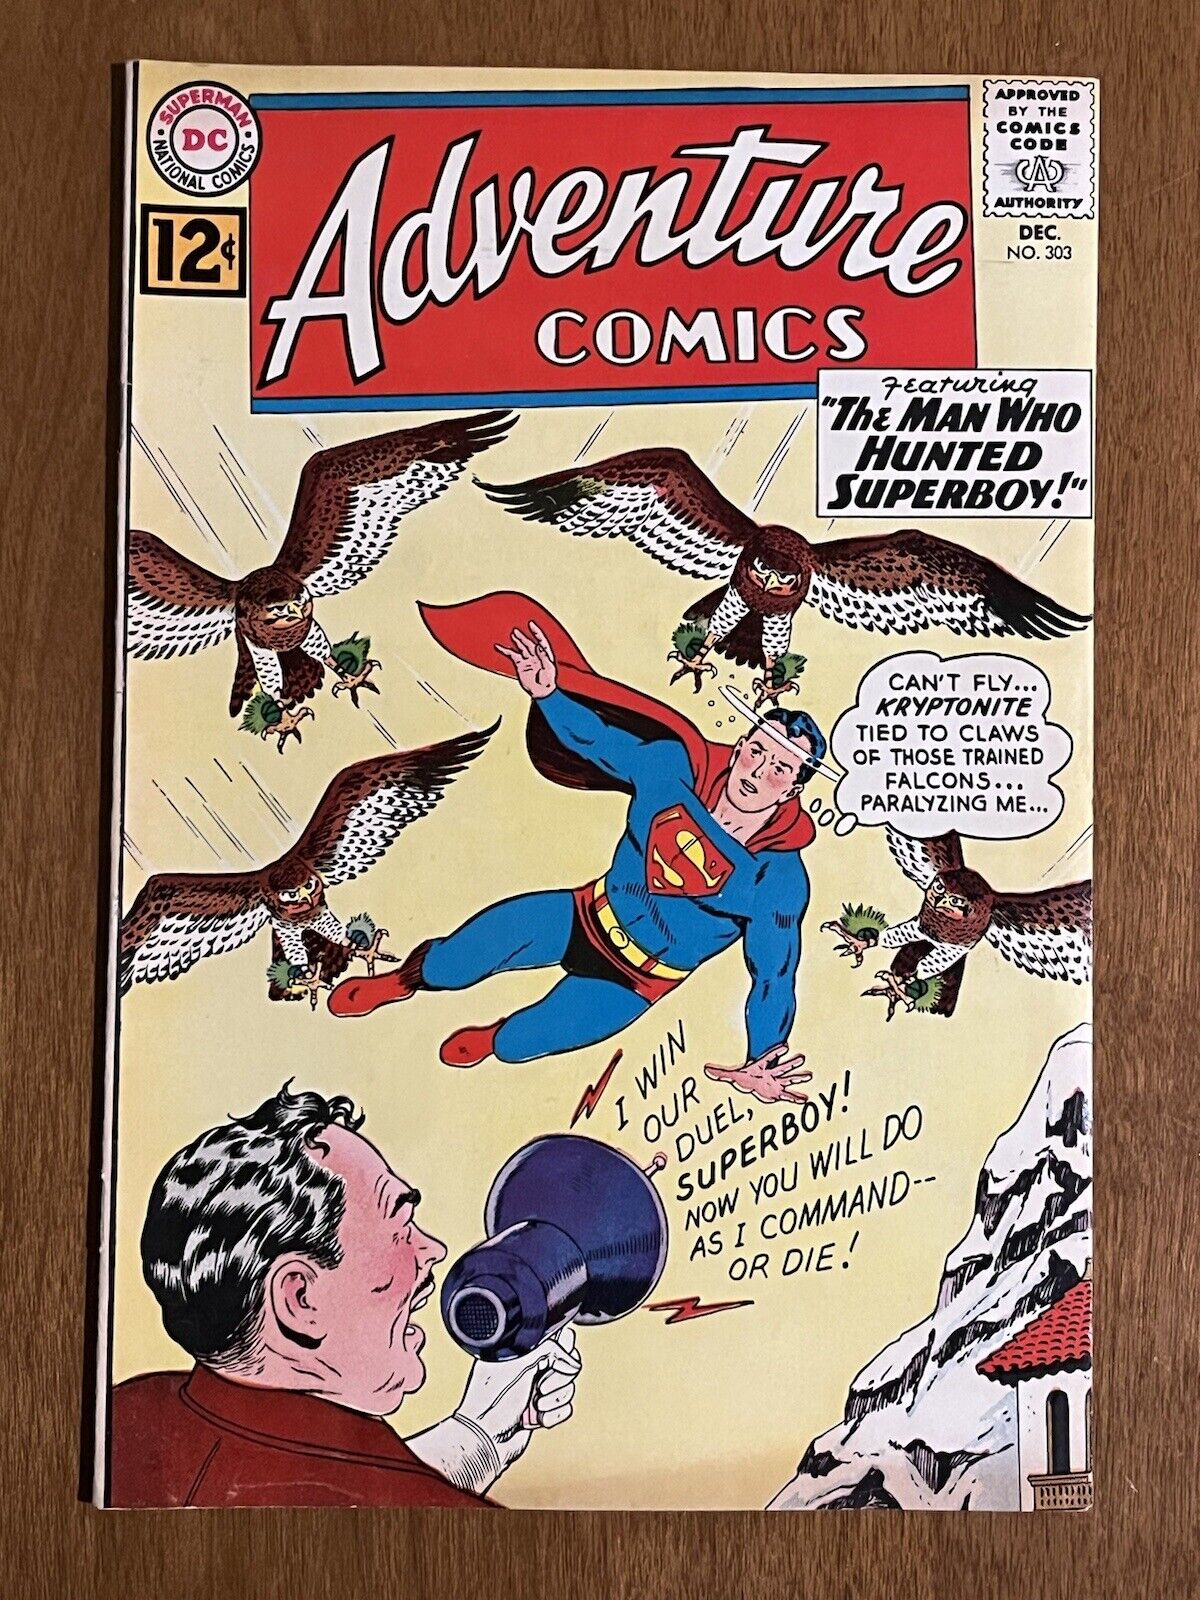 Adventure Comics #303/Silver Age DC Comic Book/1st Matter-Eater Lad/FN+